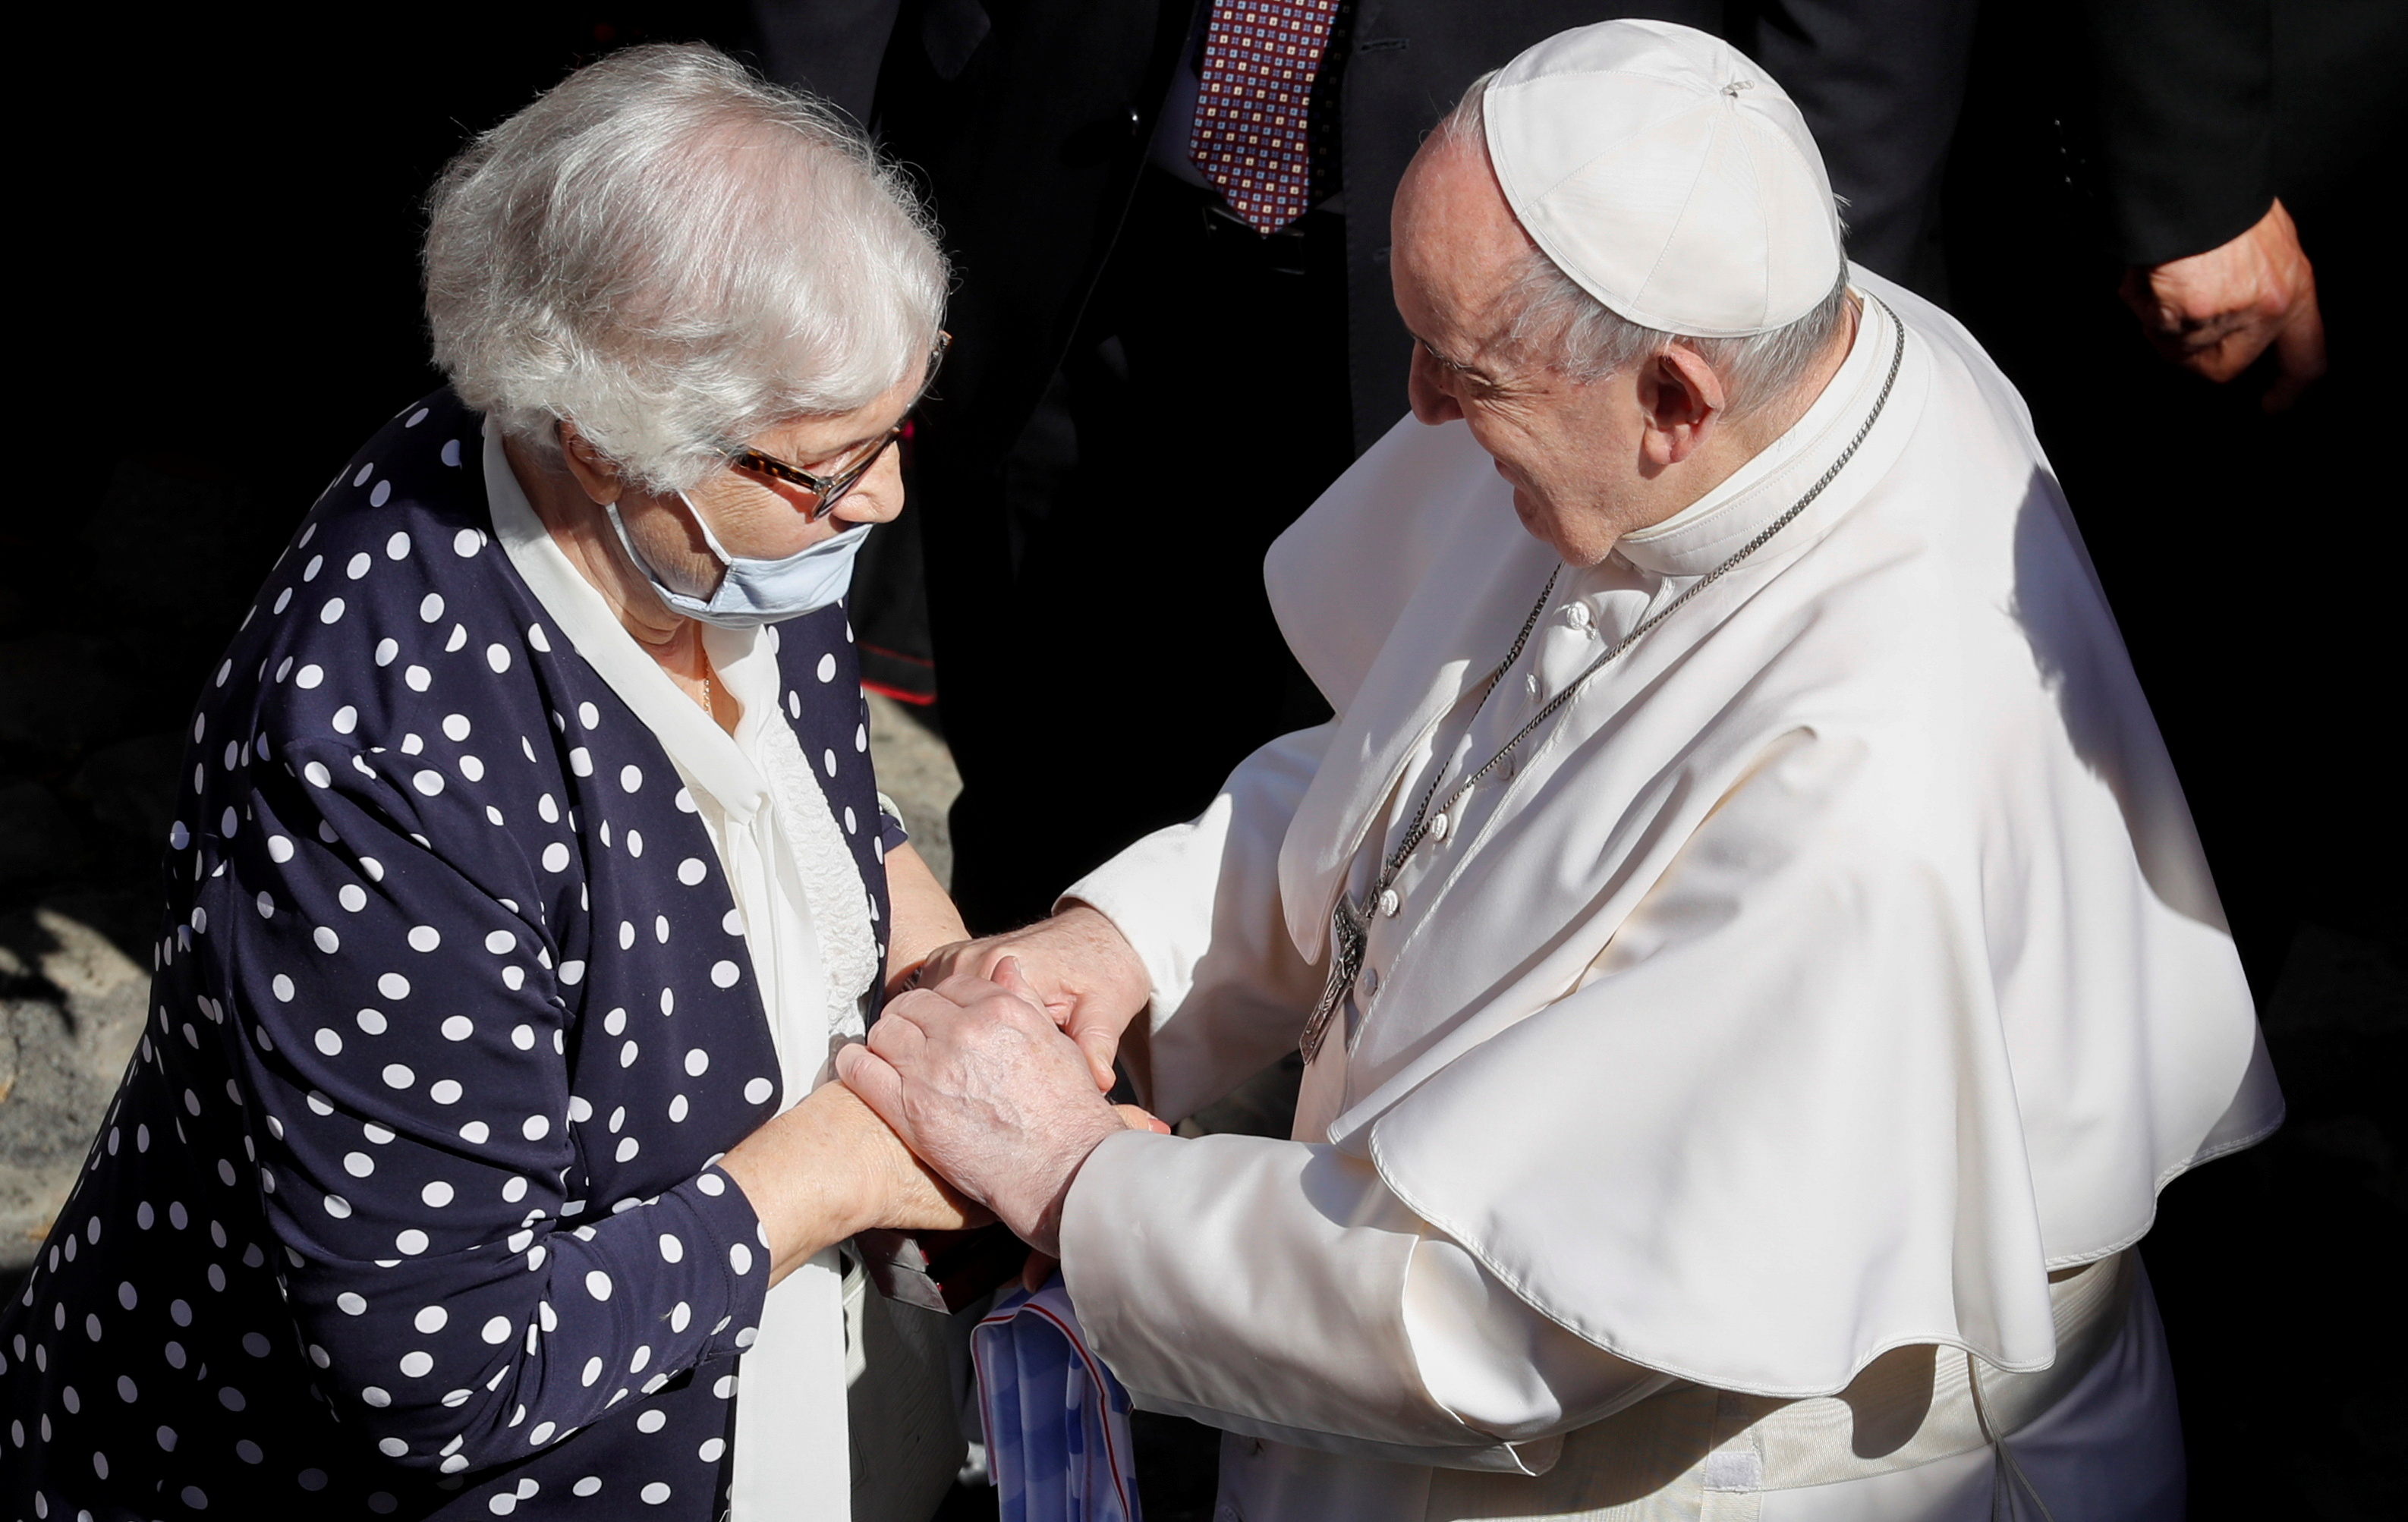 Pope meets Holocaust survivor at the Vatican